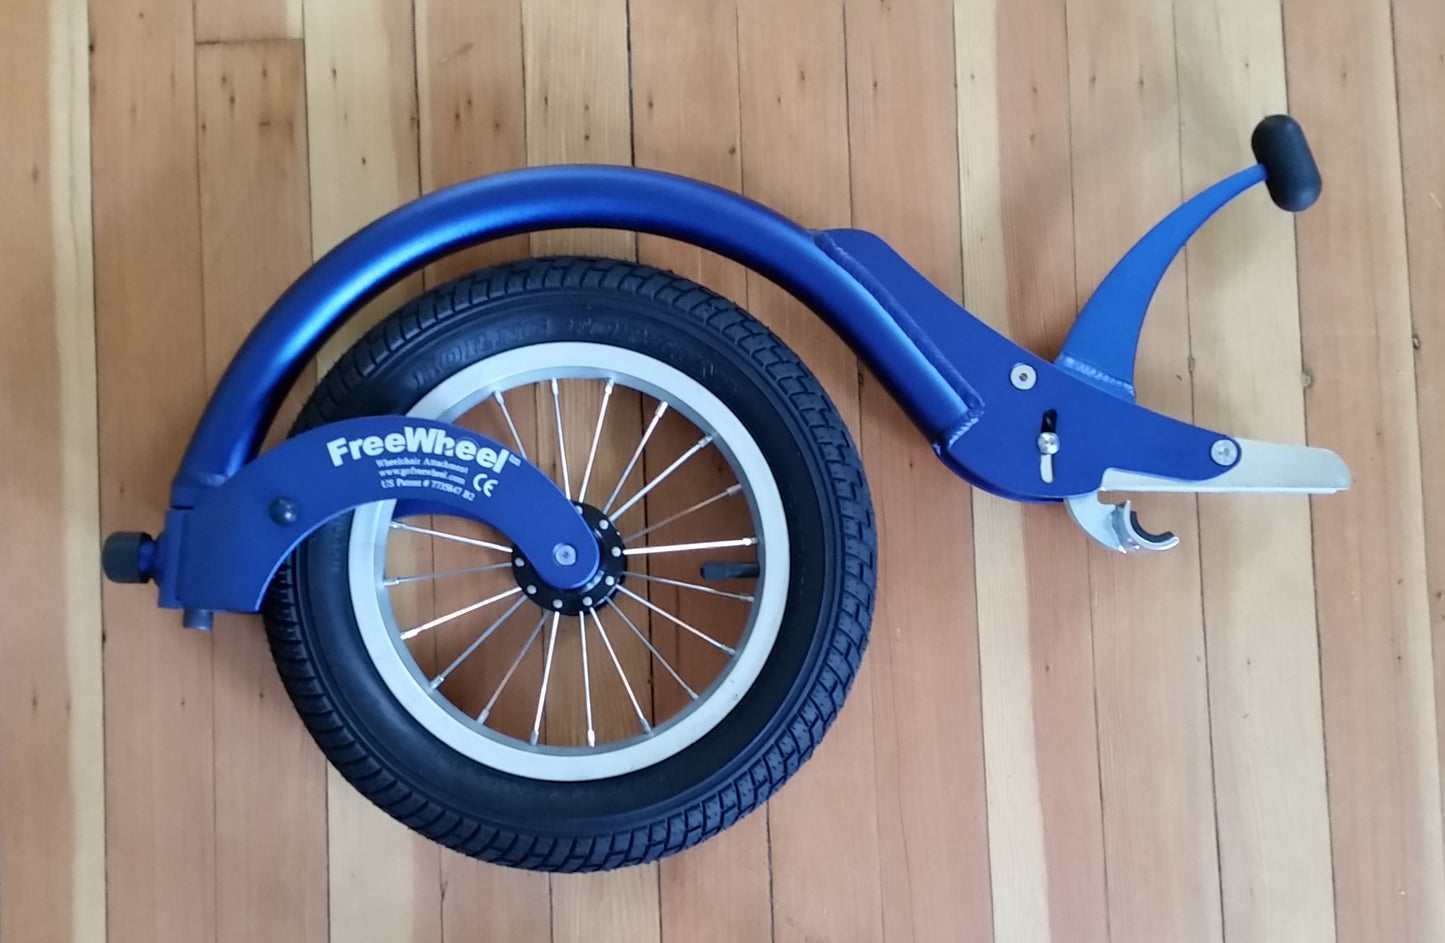 FreeWheel Wheelchair Attachment blue